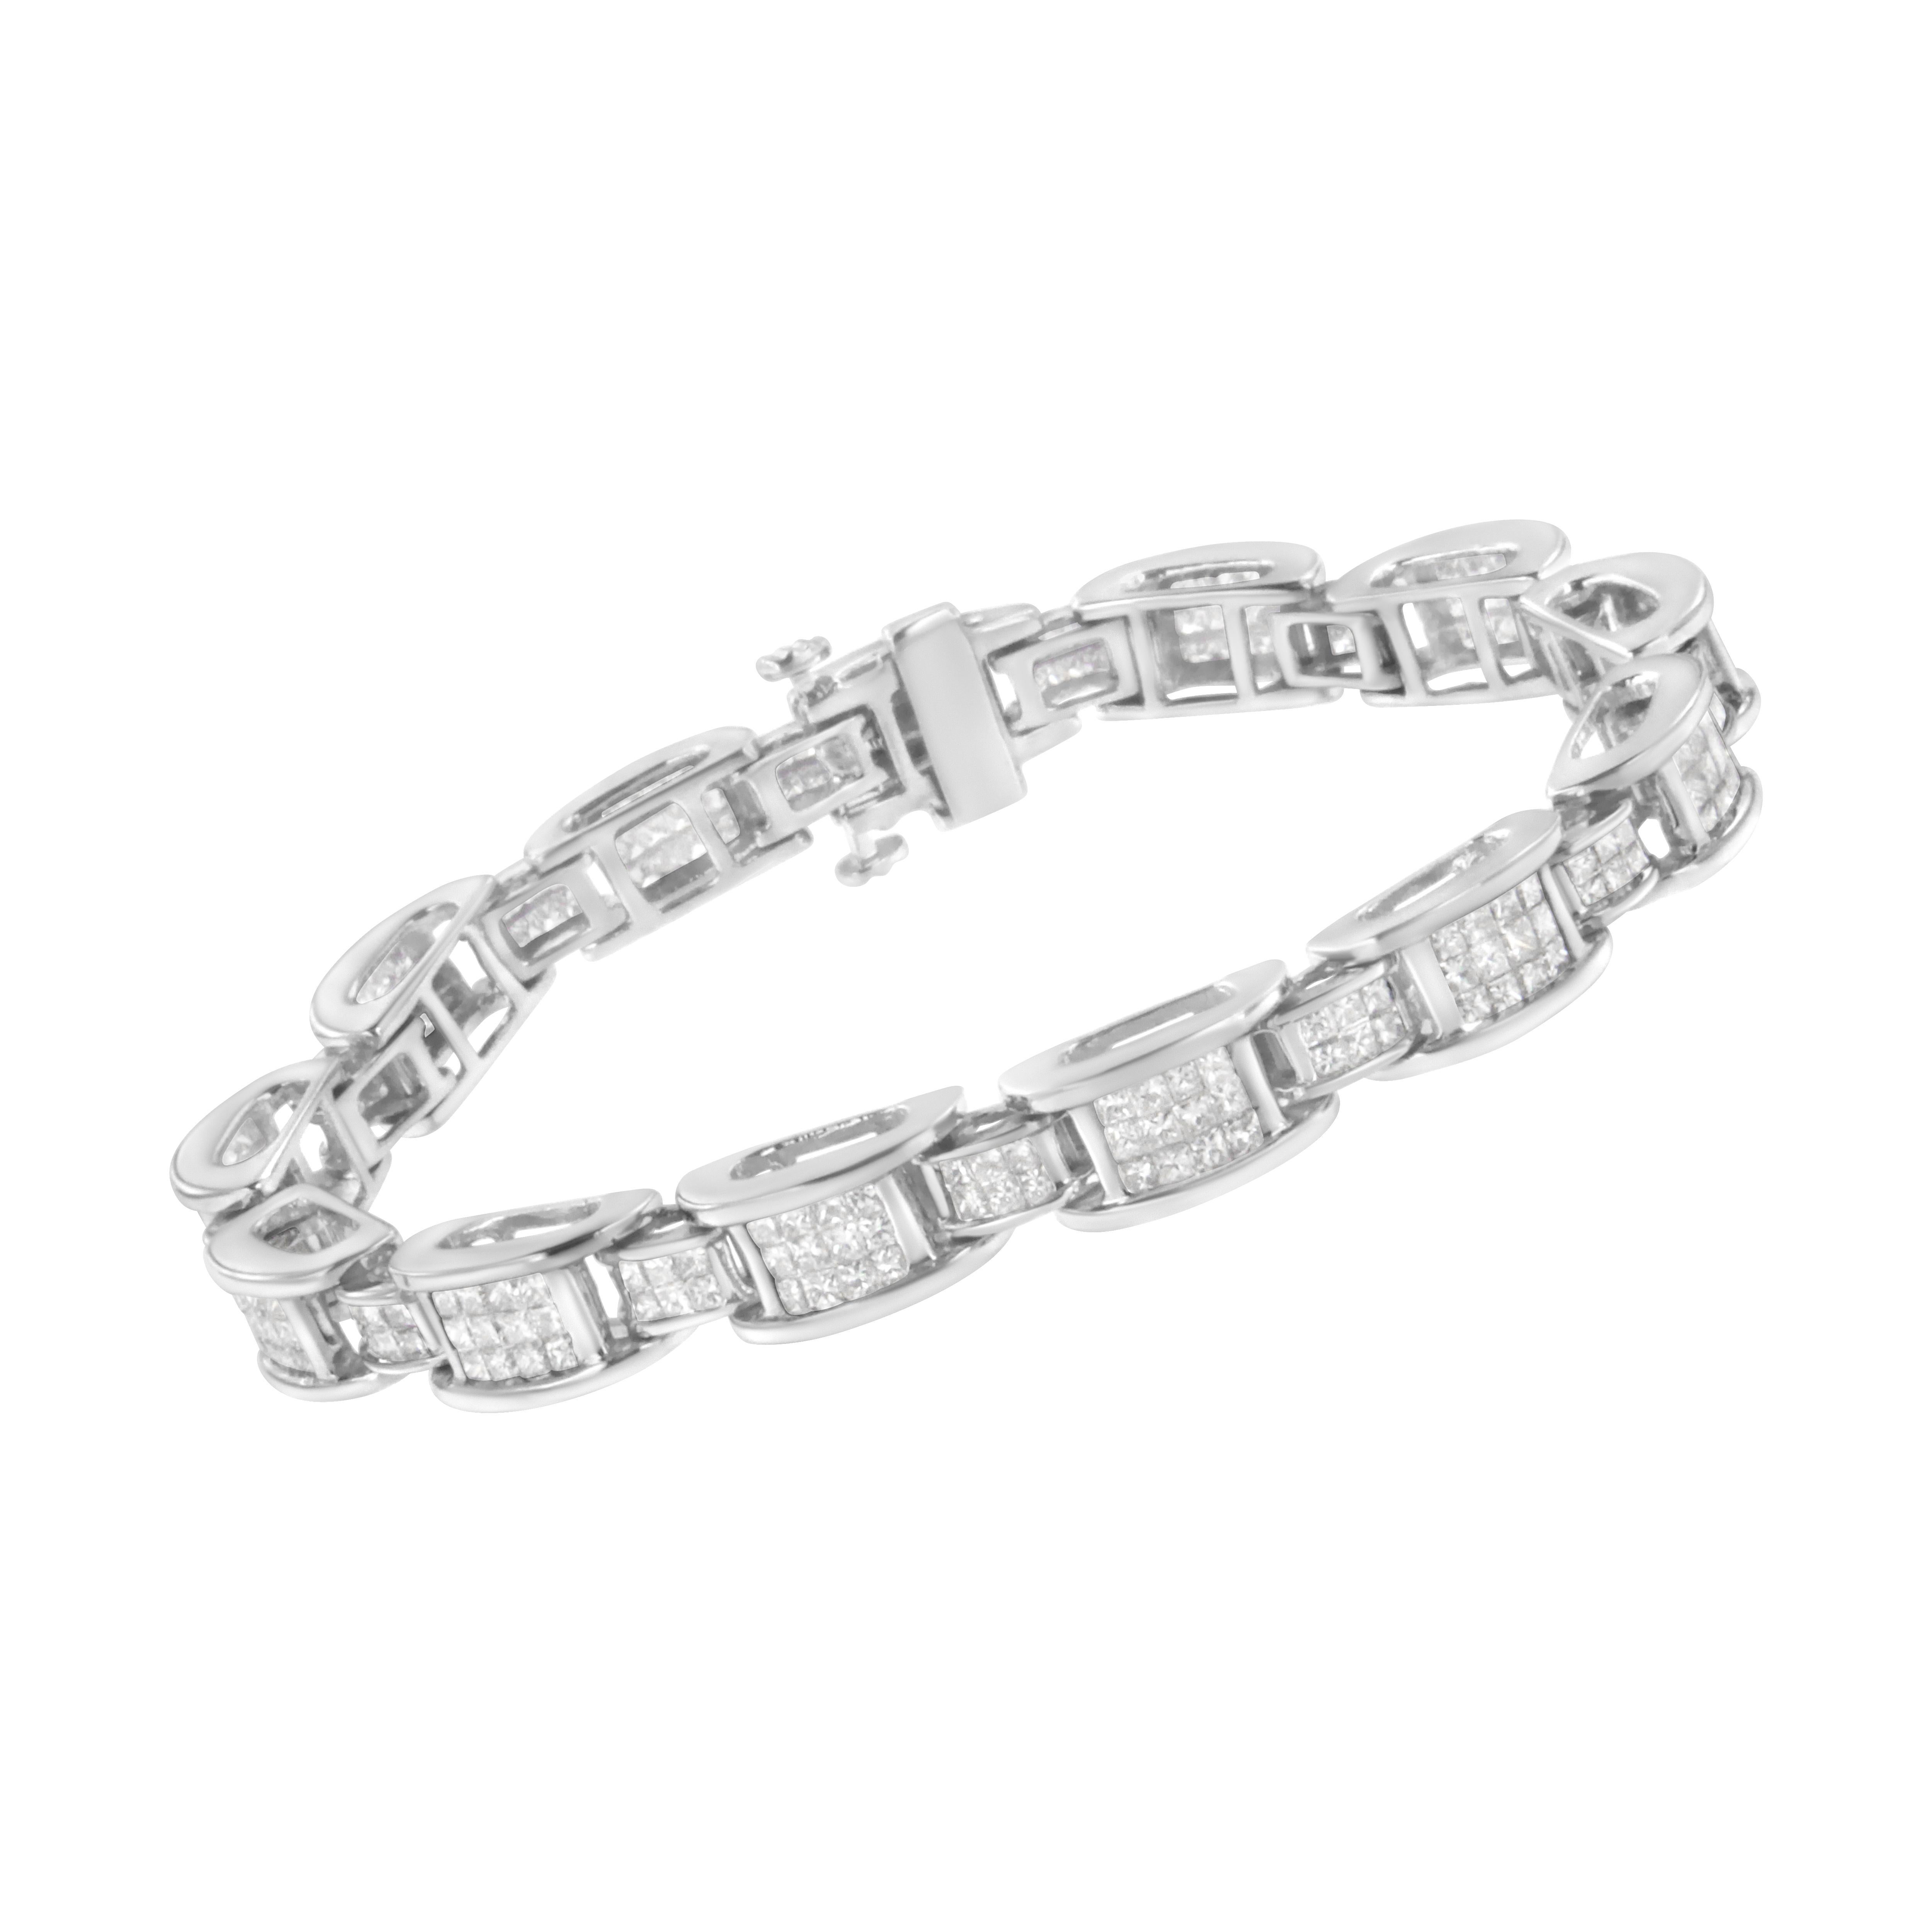 Contemporary 14K White Gold 5.0 Carat Diamond Alternating Size D Shaped Link Tennis Bracelet For Sale